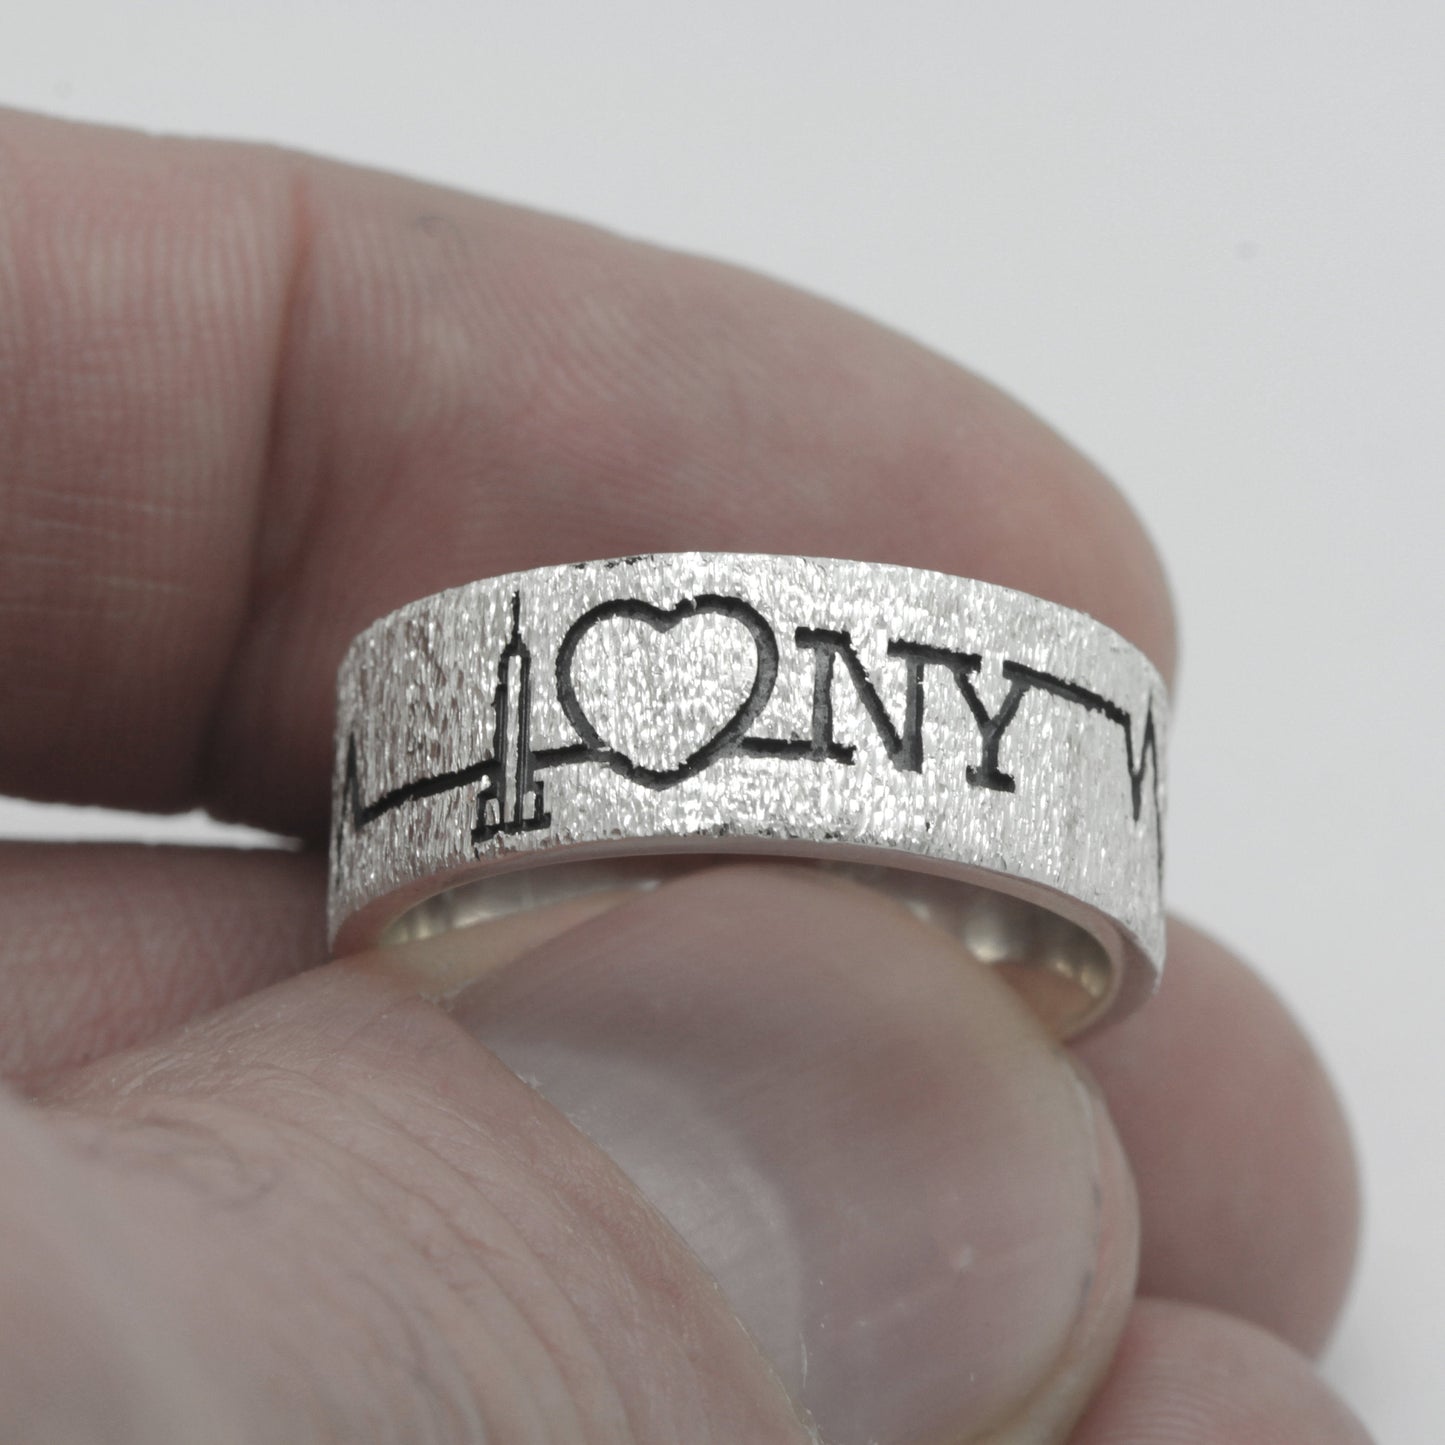 Heartbeat of New York Unisex Engagement Souvenir Ring